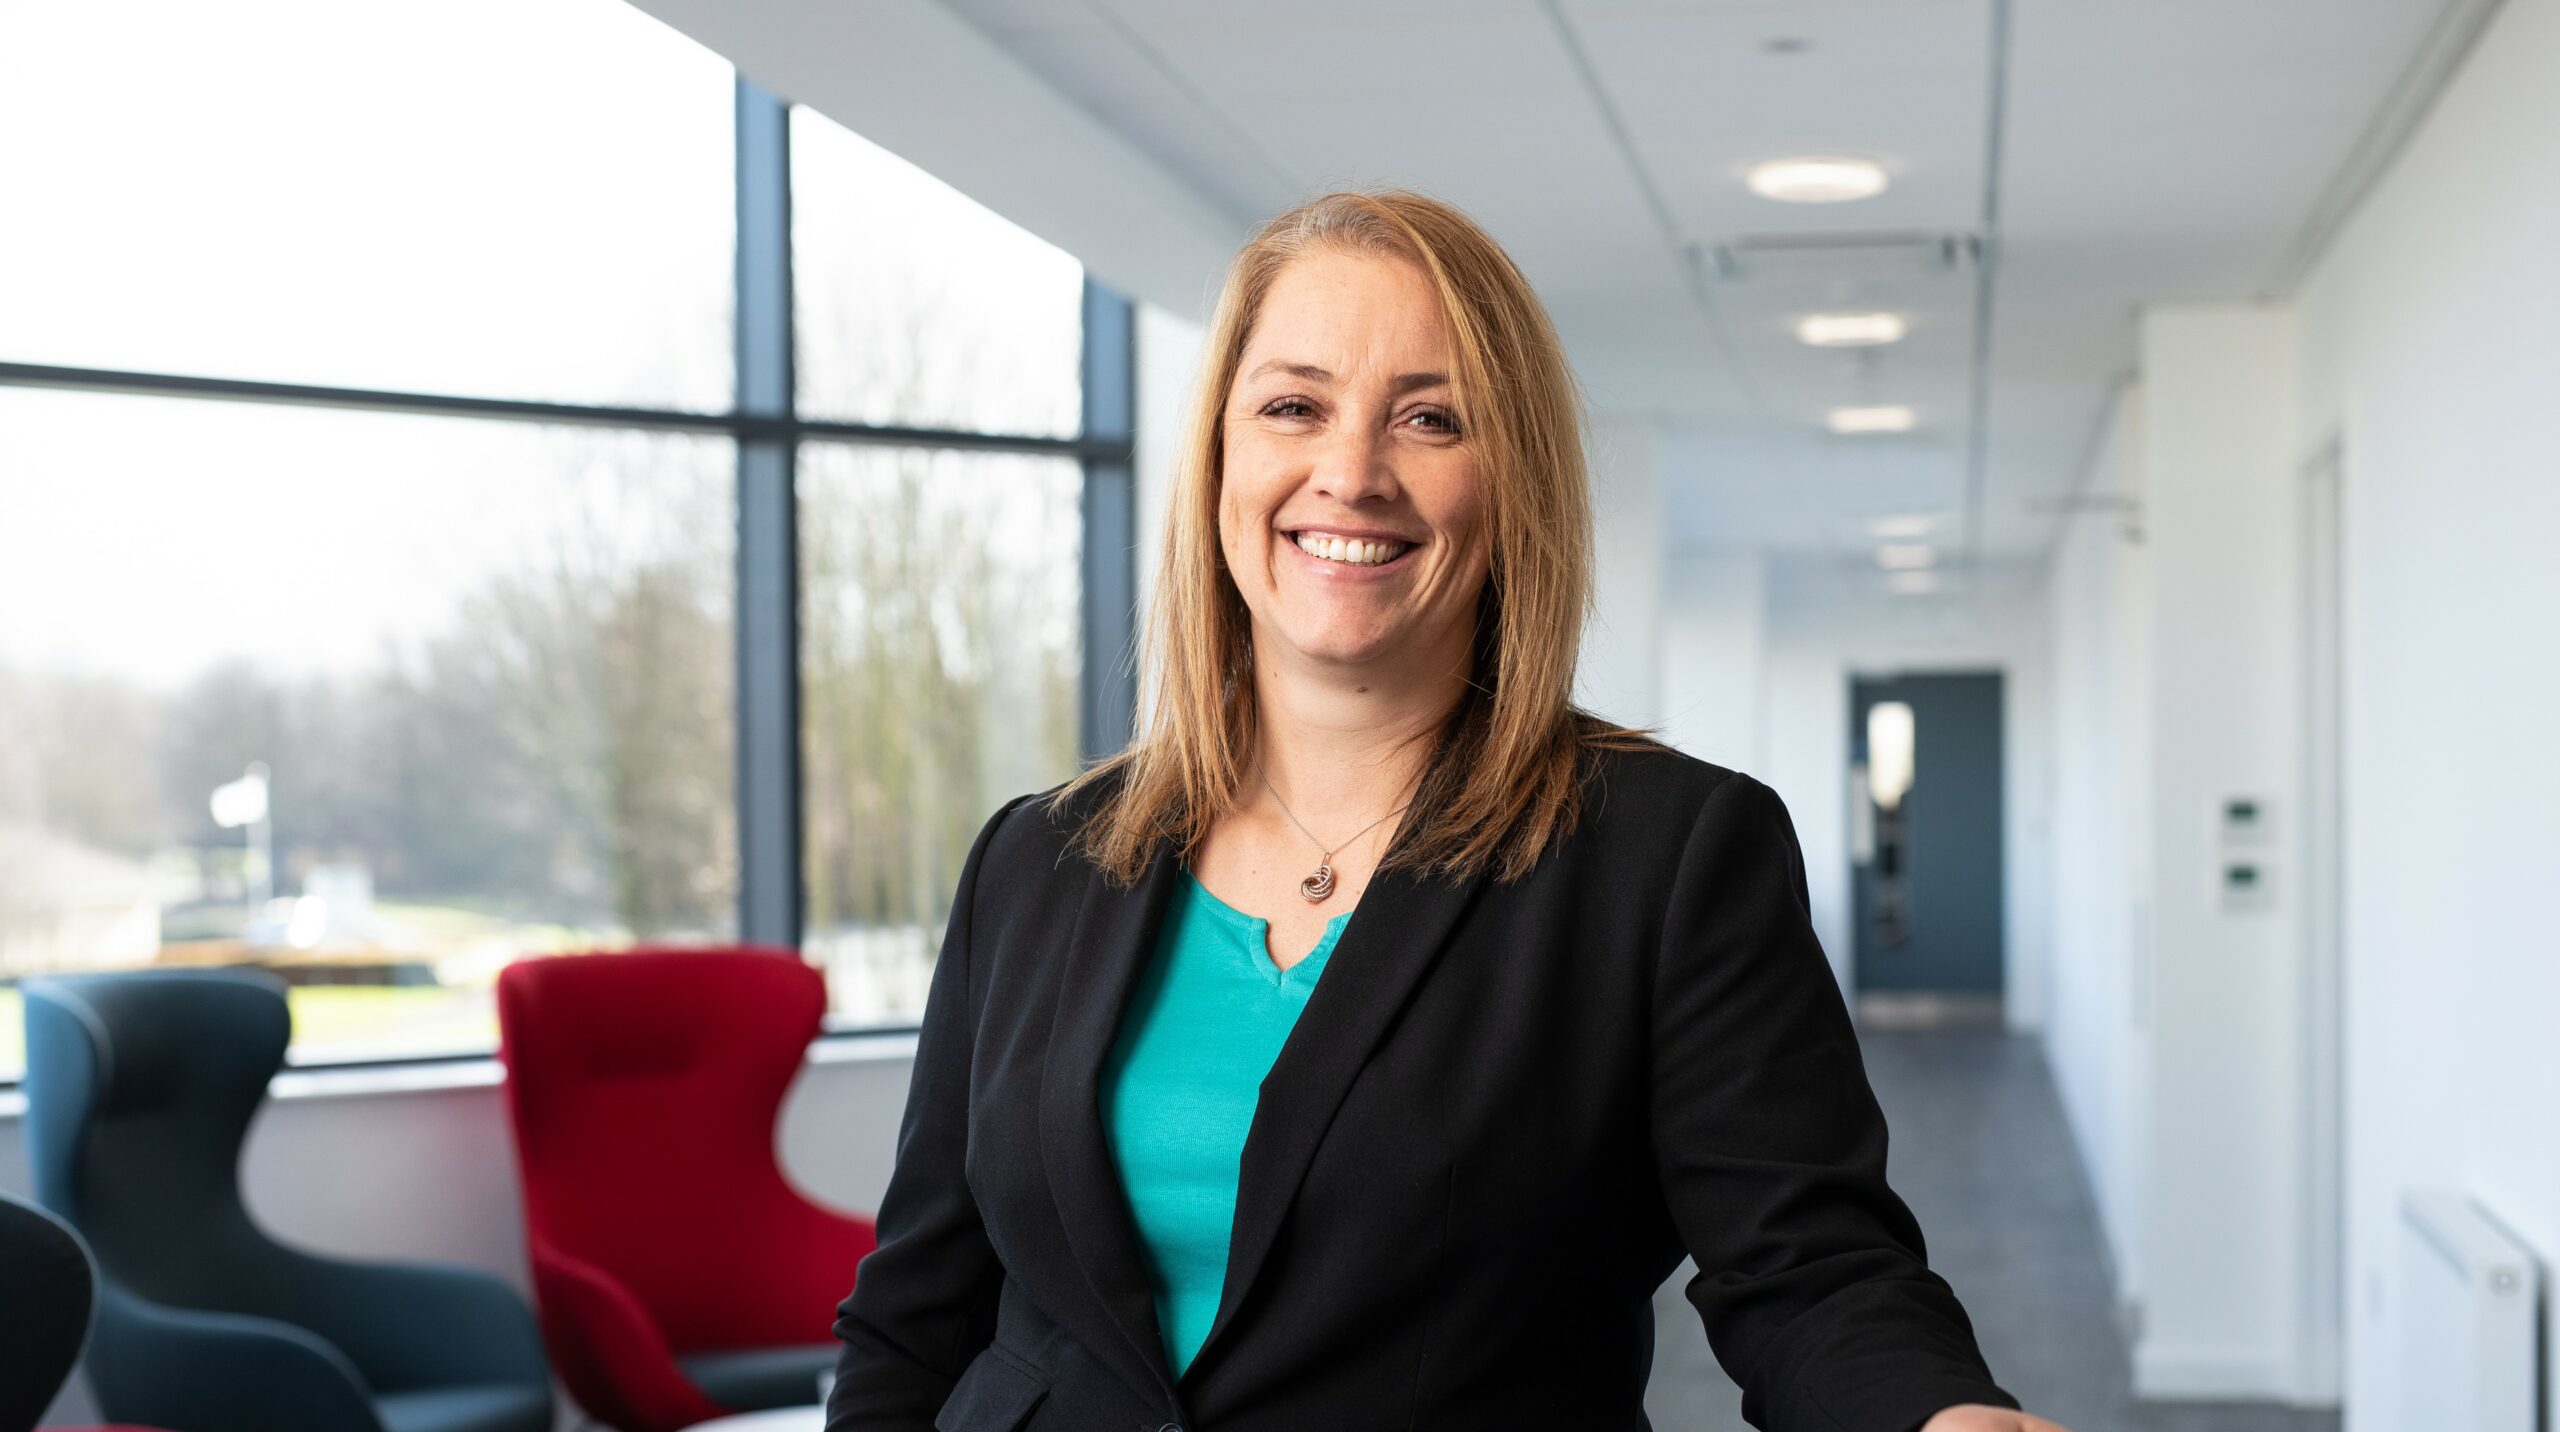 Amanda Hope UK Fire Business Development Manager at Advanced